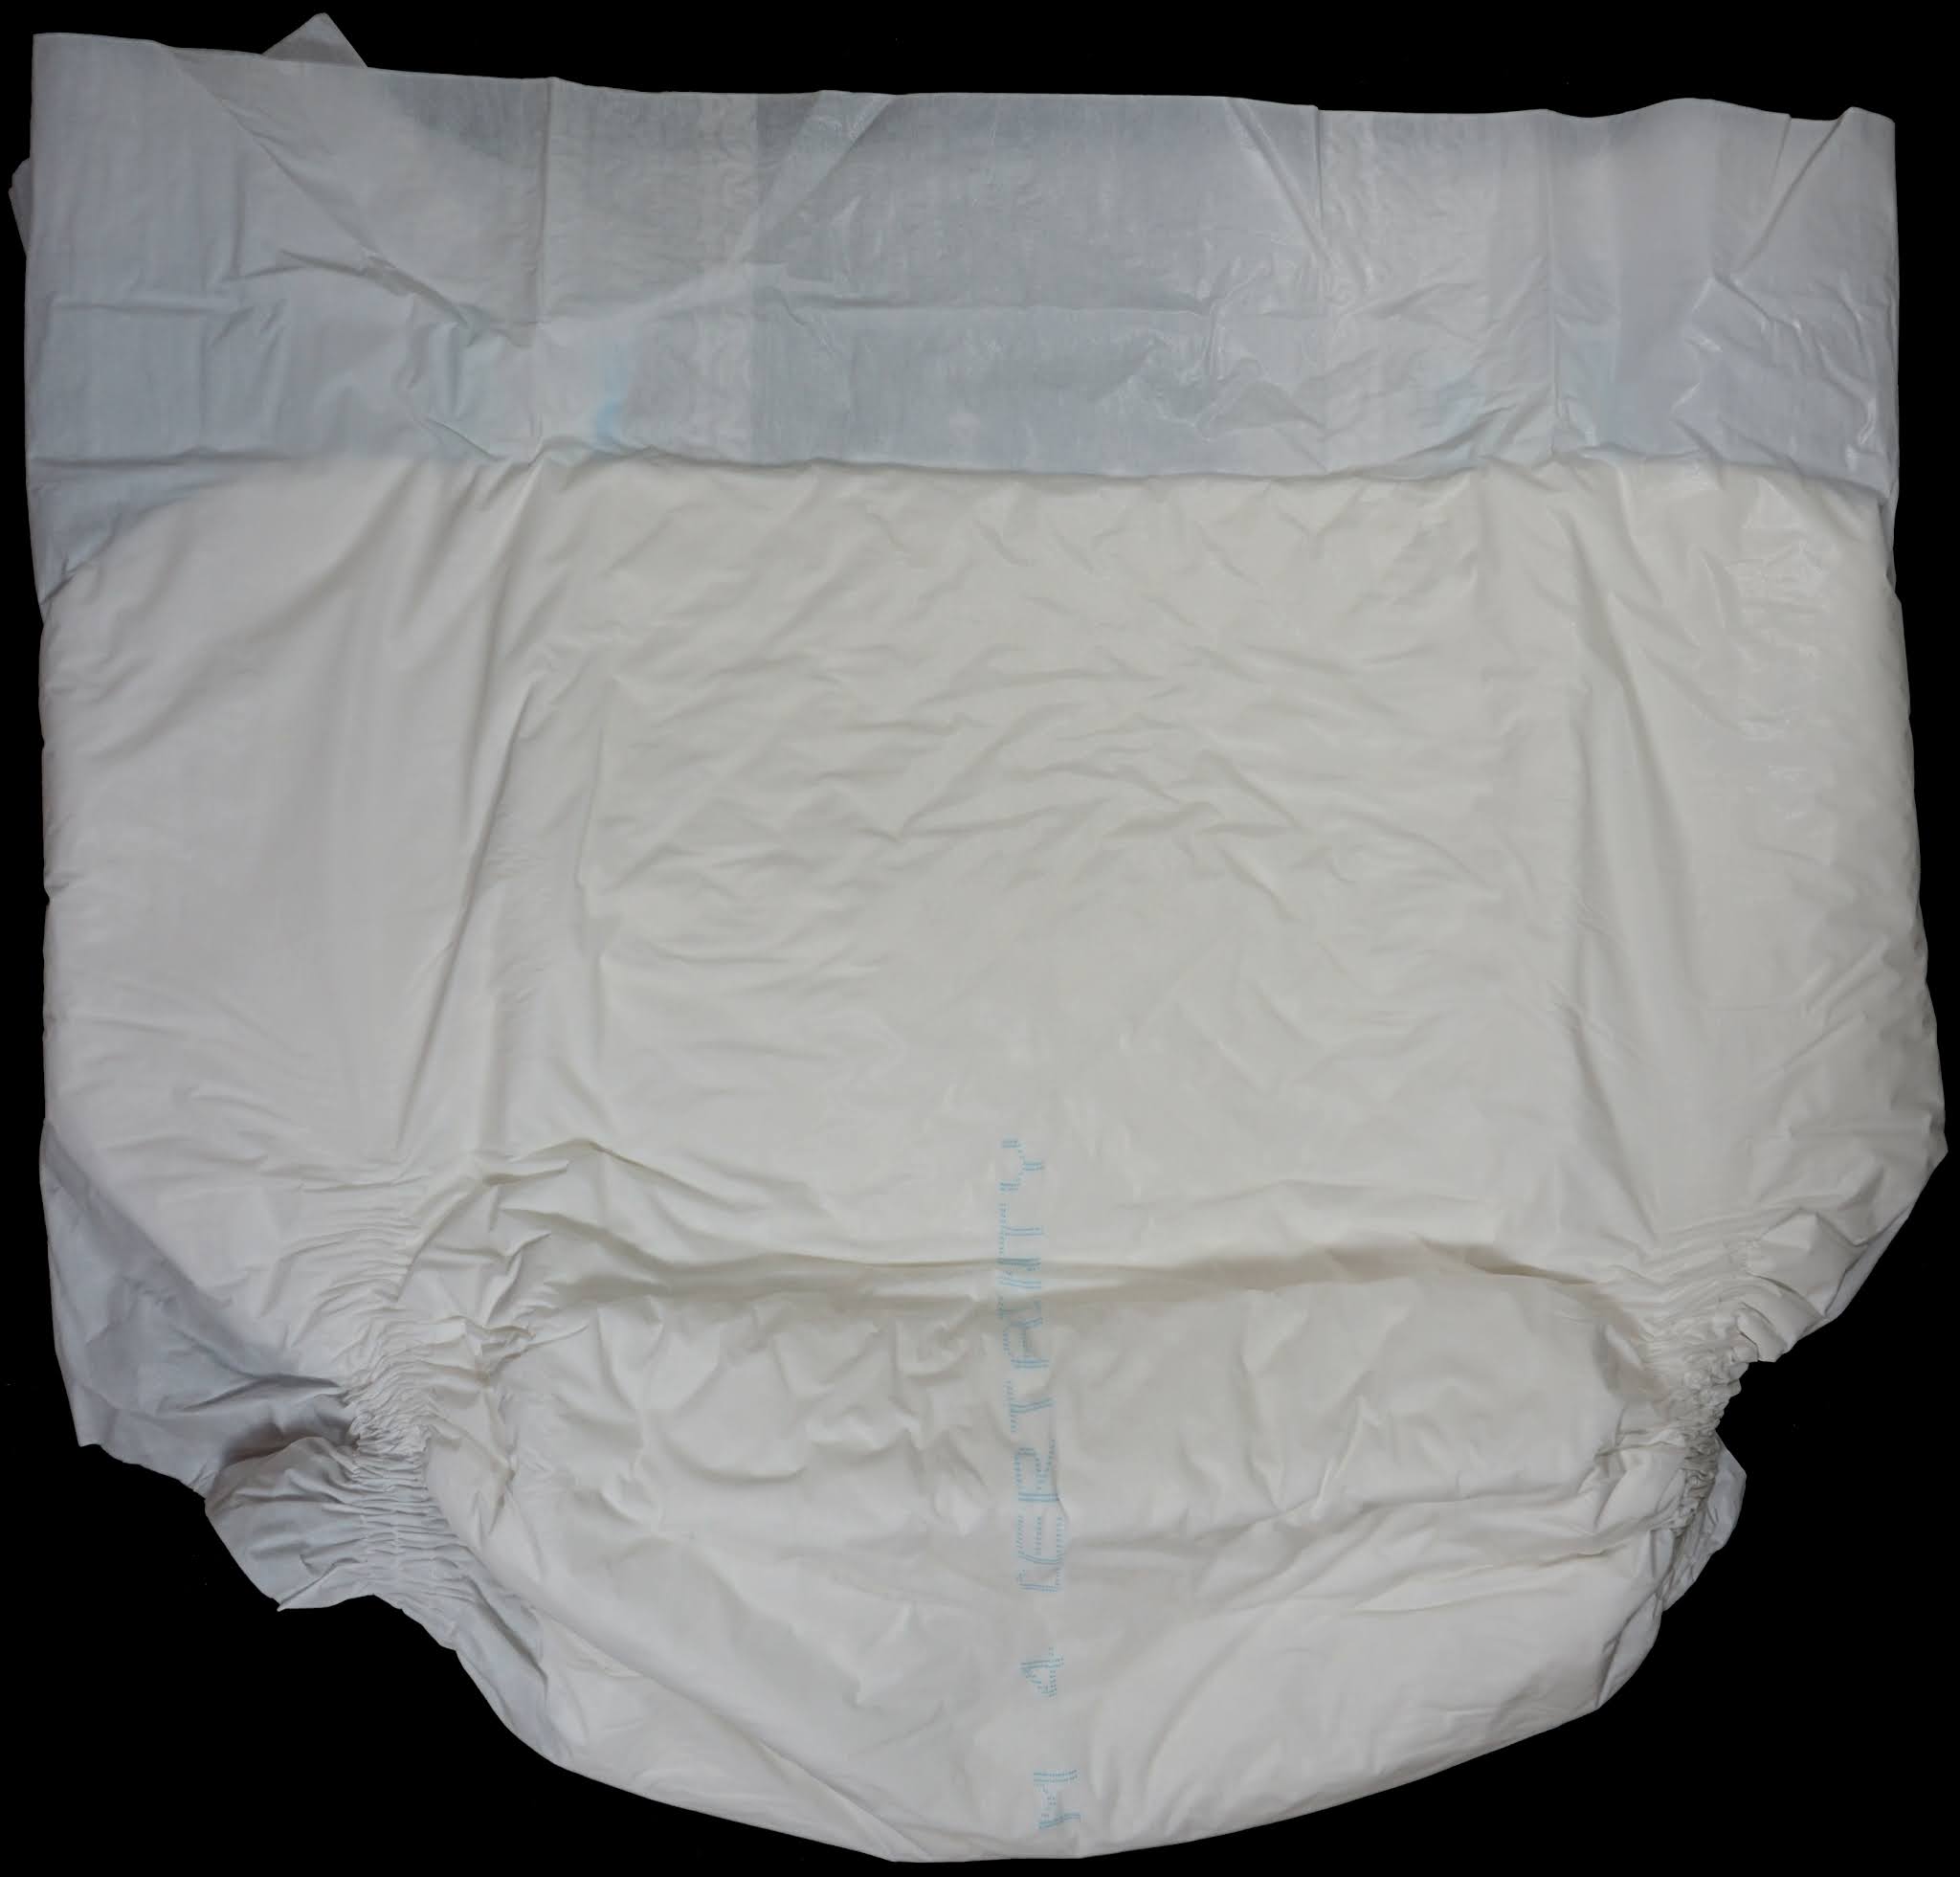 Diaper Metrics Certainty Adult Diapers Review